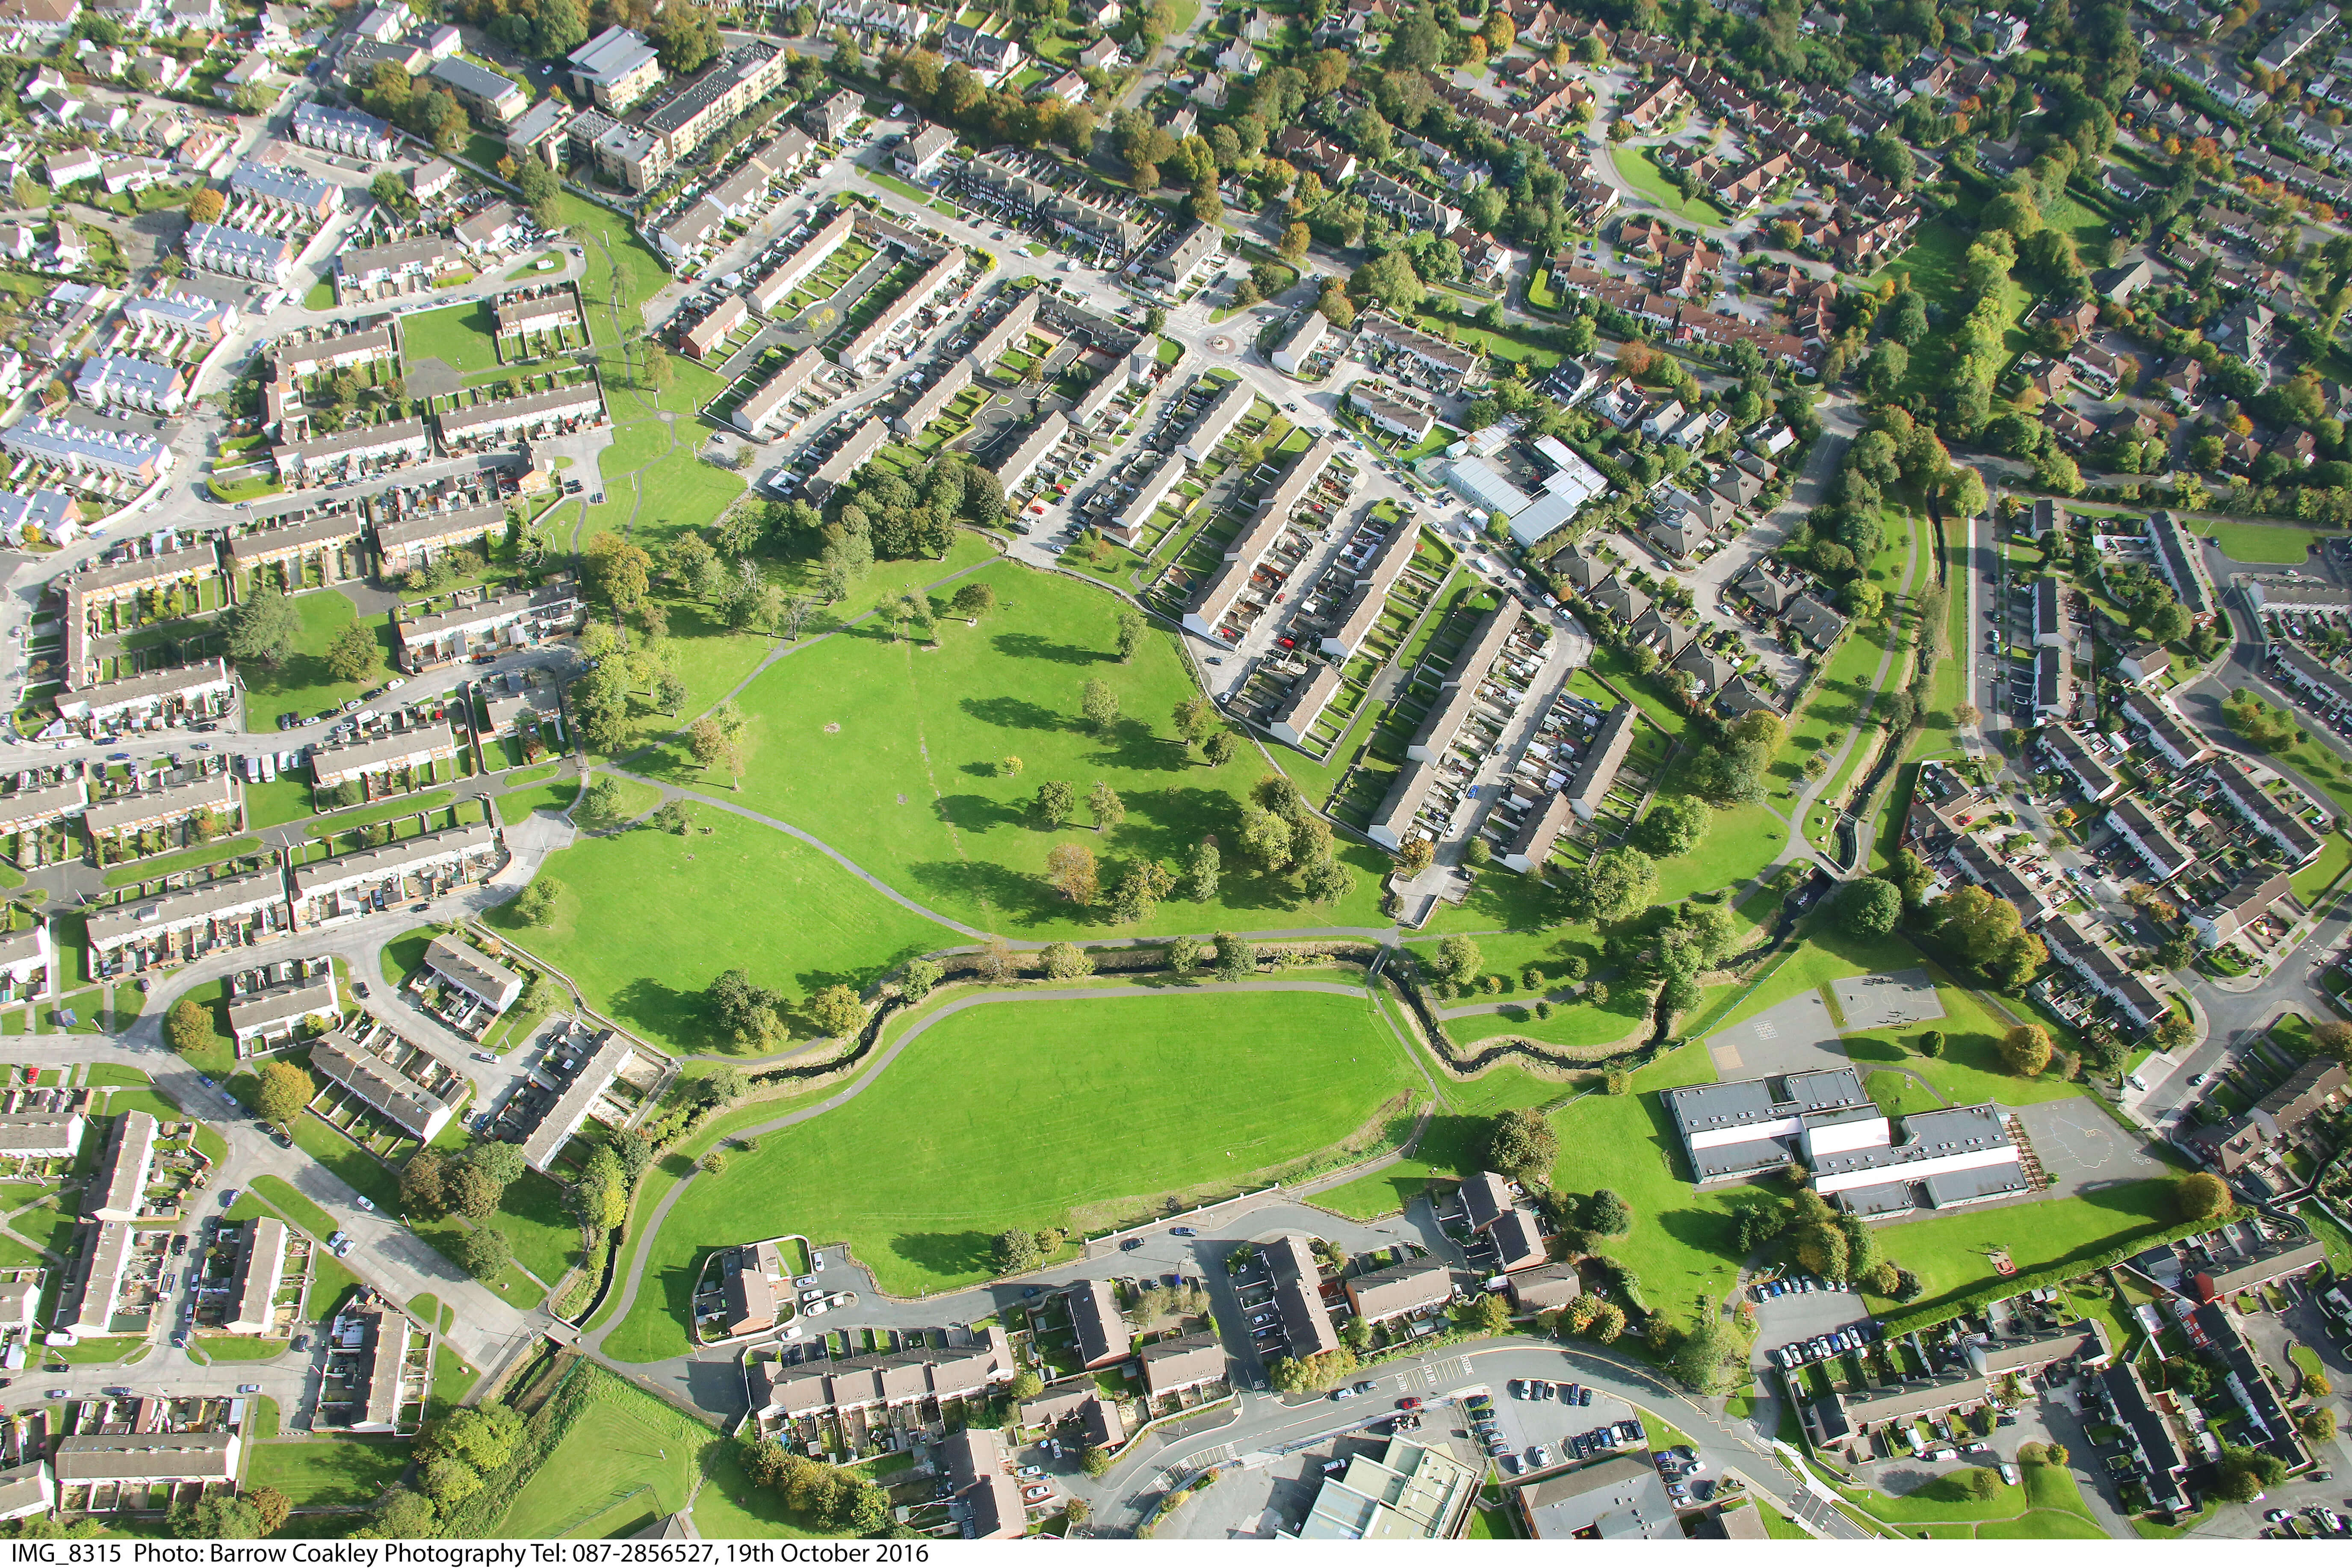 Image 3: Aerial view of Glenavon Park